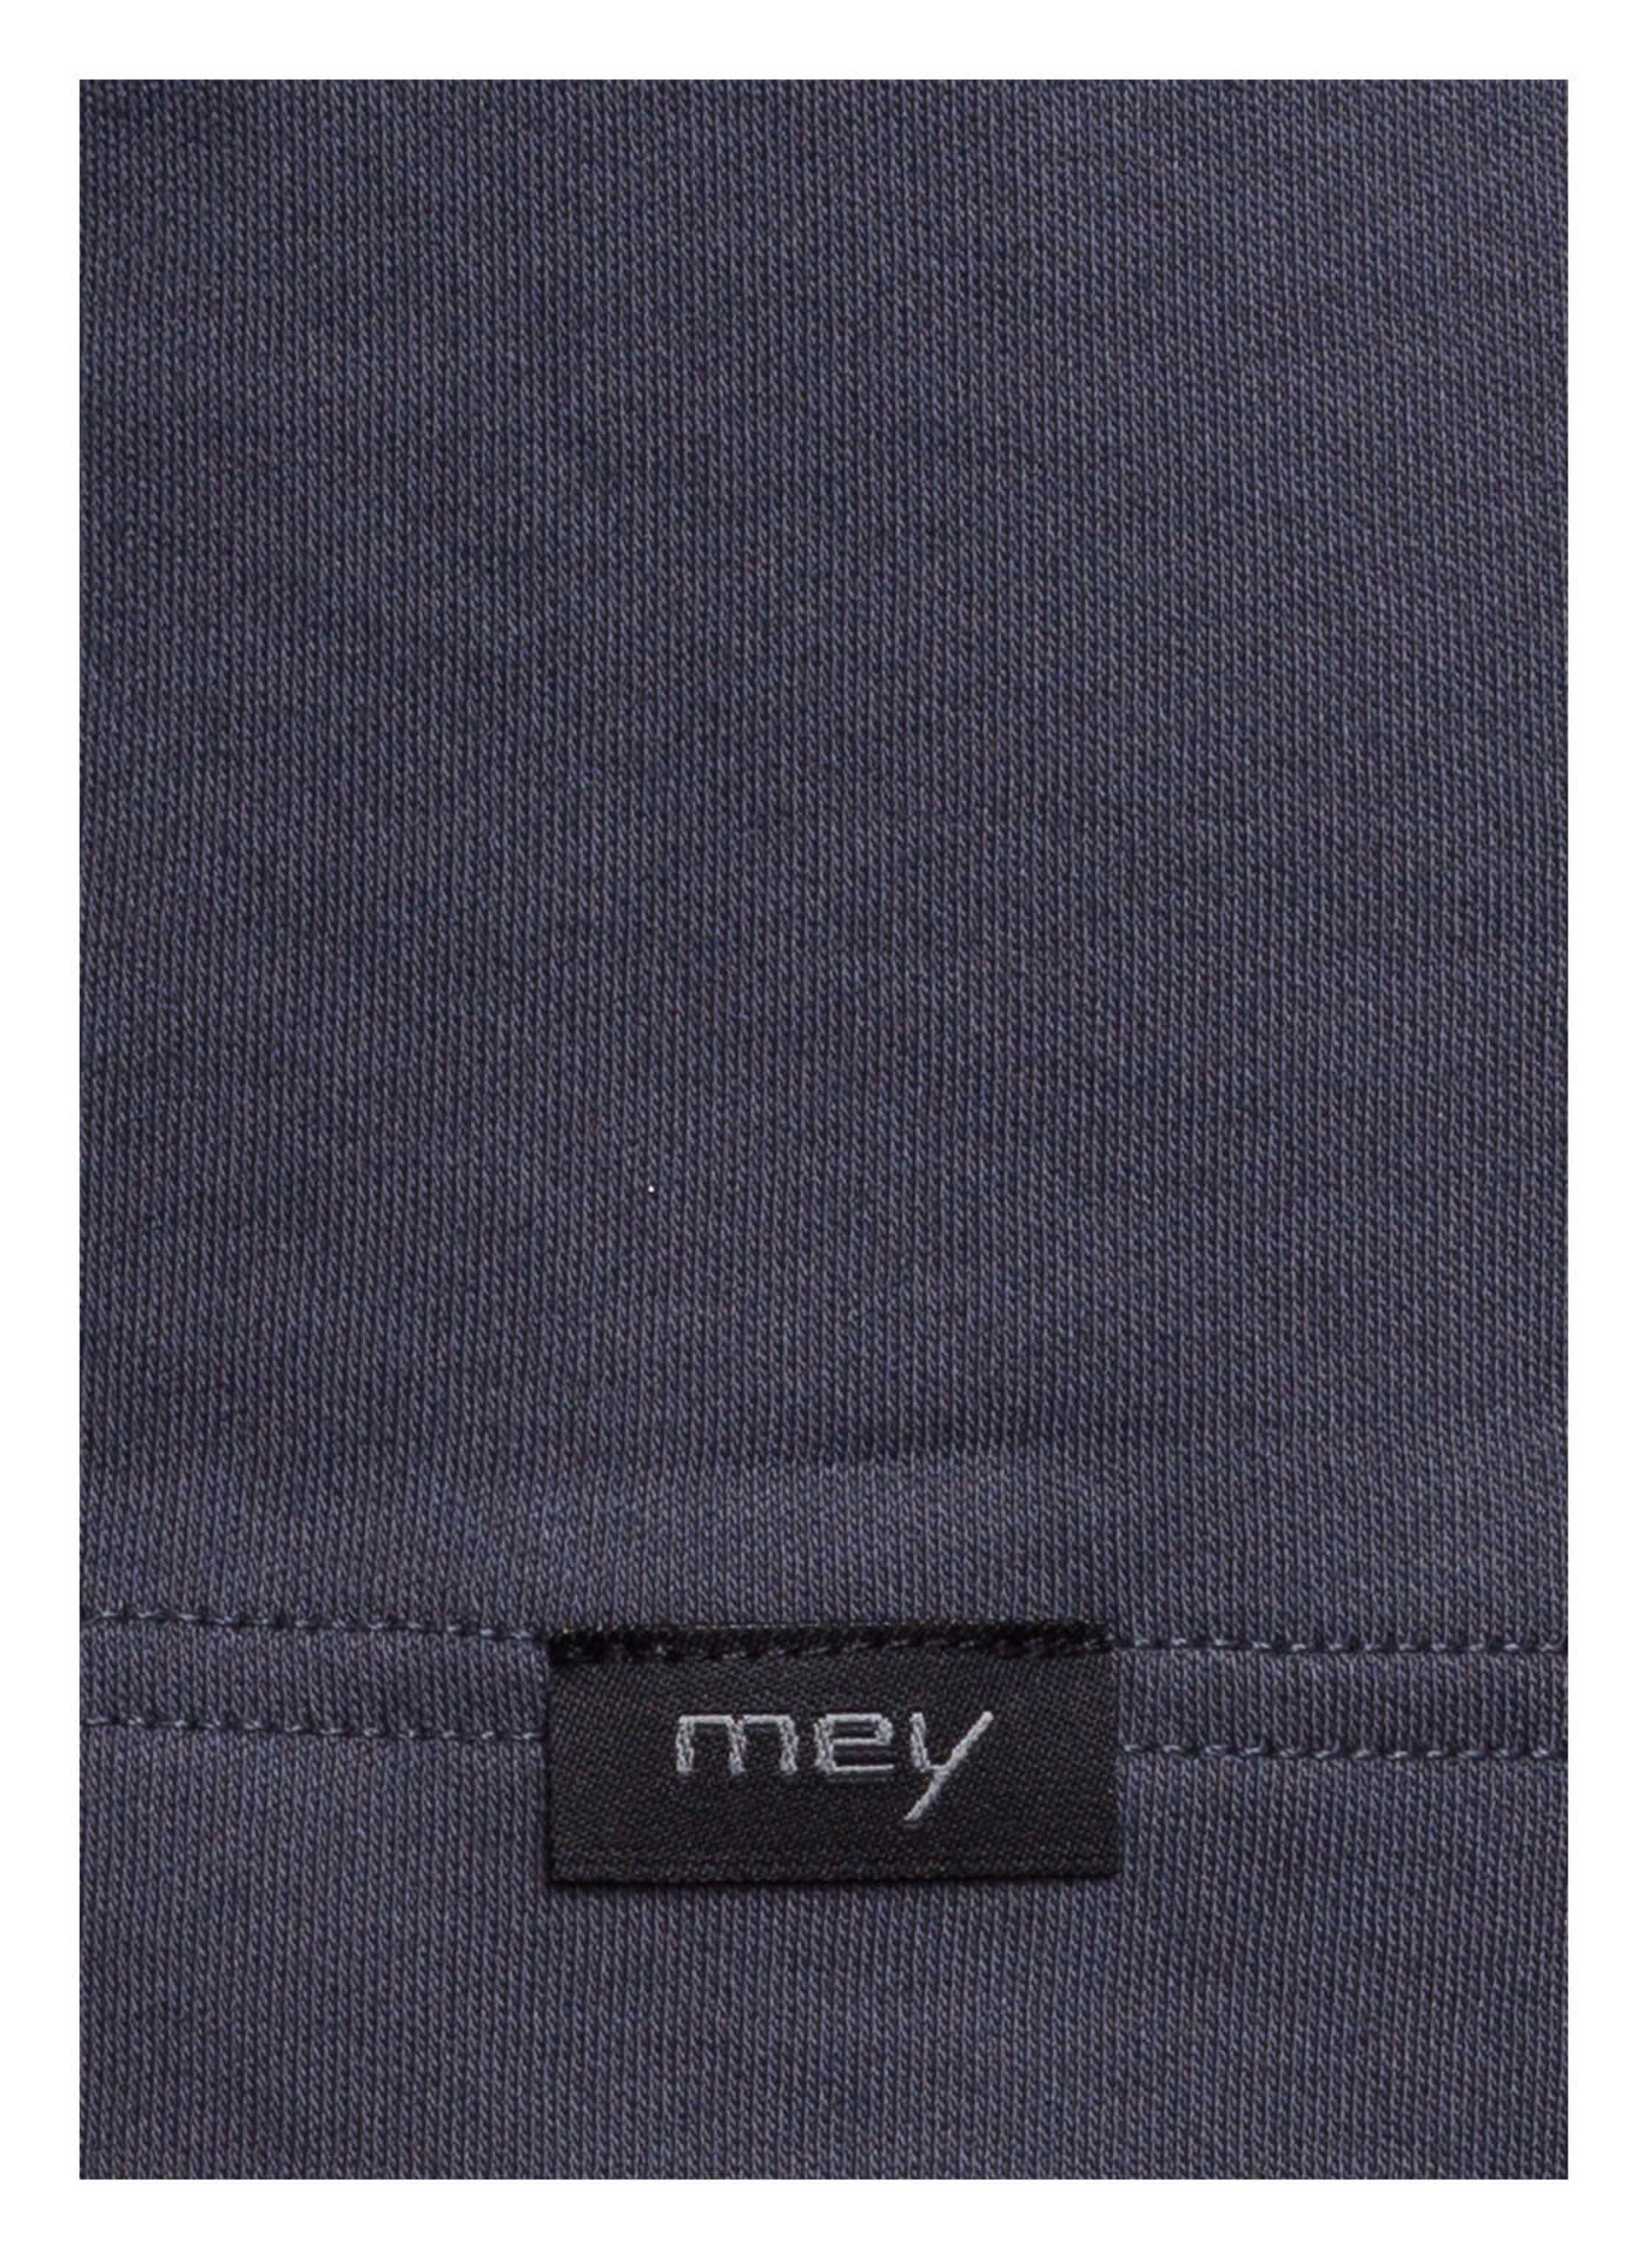  Mey Lounge Shirt Serie Basic Lounge Grau 